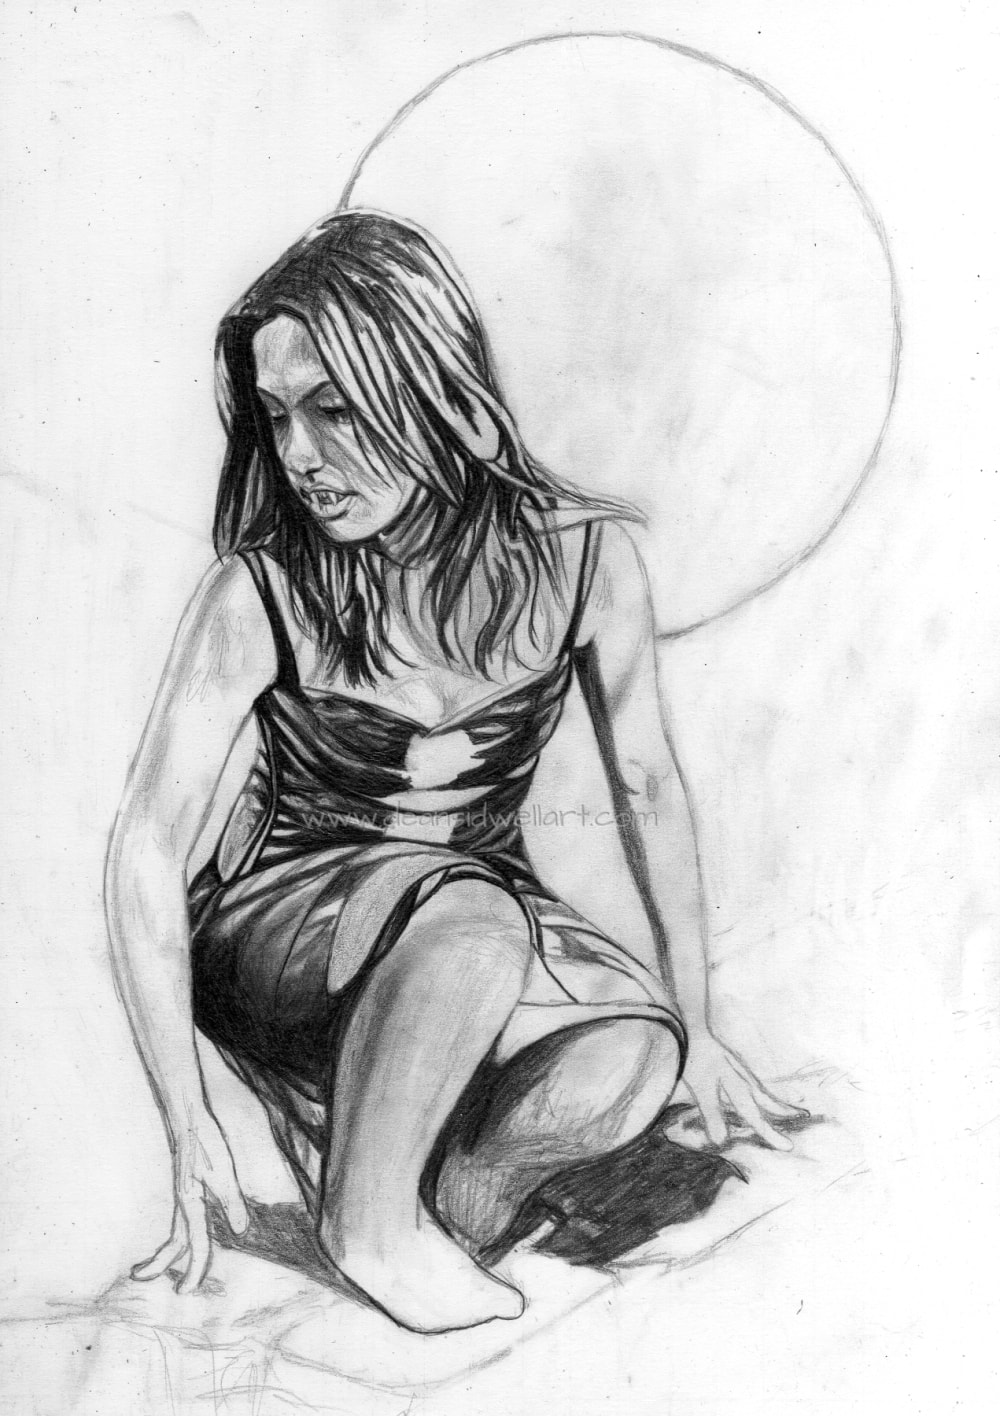 Dean Sidwell Art. Nocturnal: Vampire girl drawing - Work in progress tutorial 1